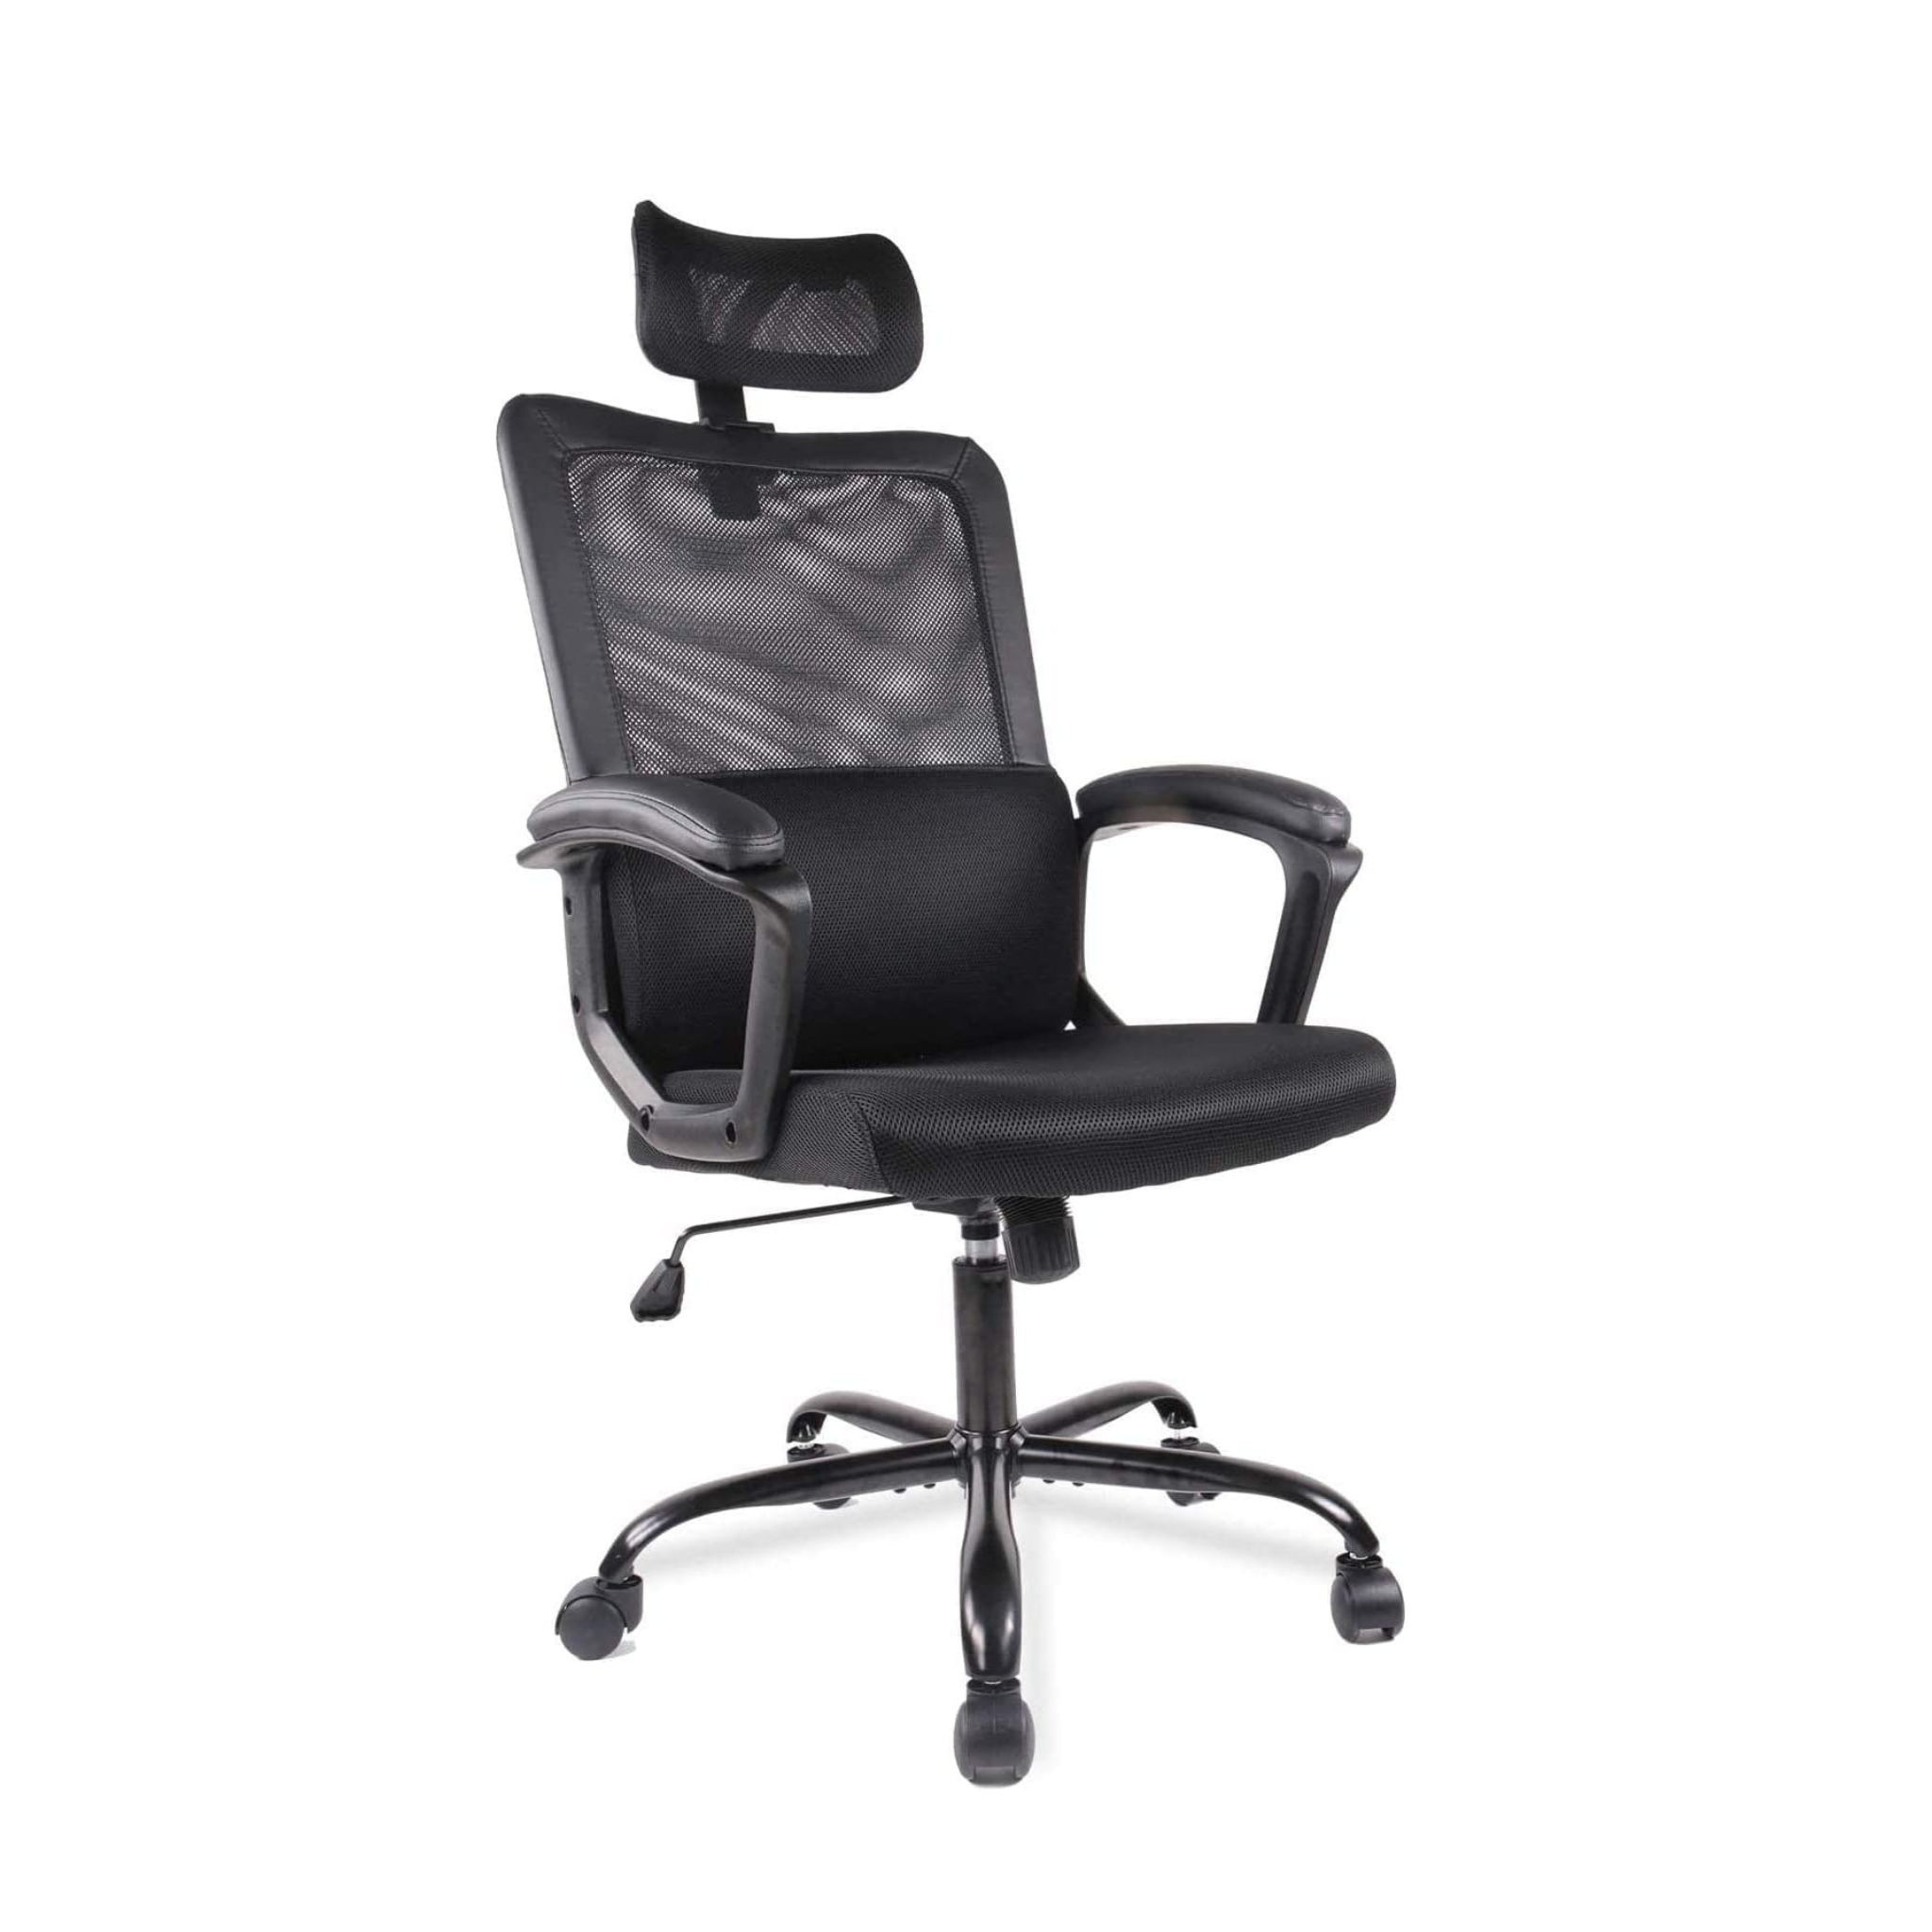 Smug Ergonomic Mesh Home Office Computer Chair